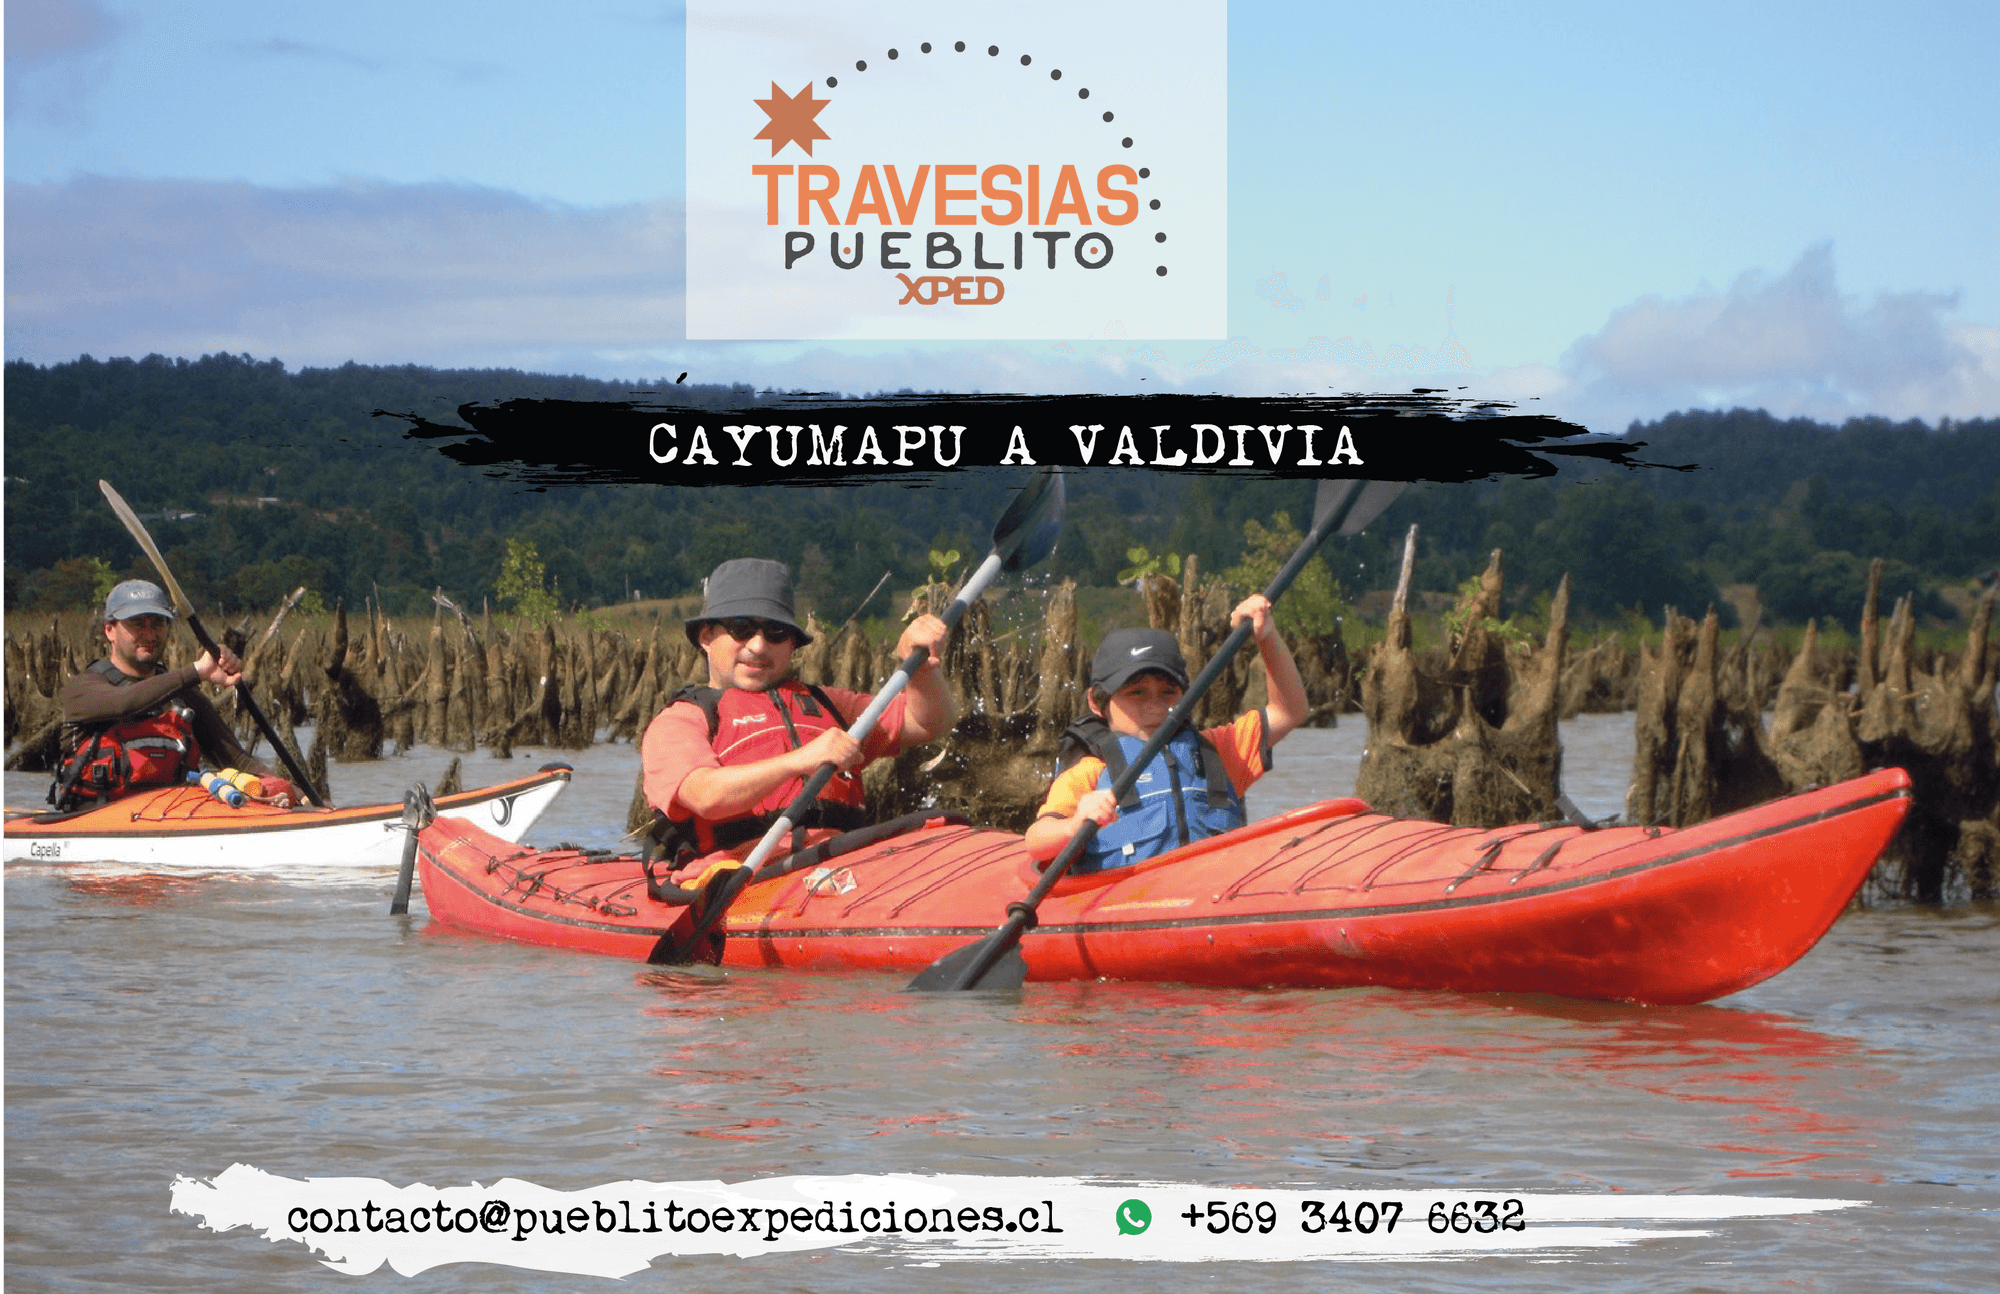 Travesía en kayak Cayumapu a Valdivia